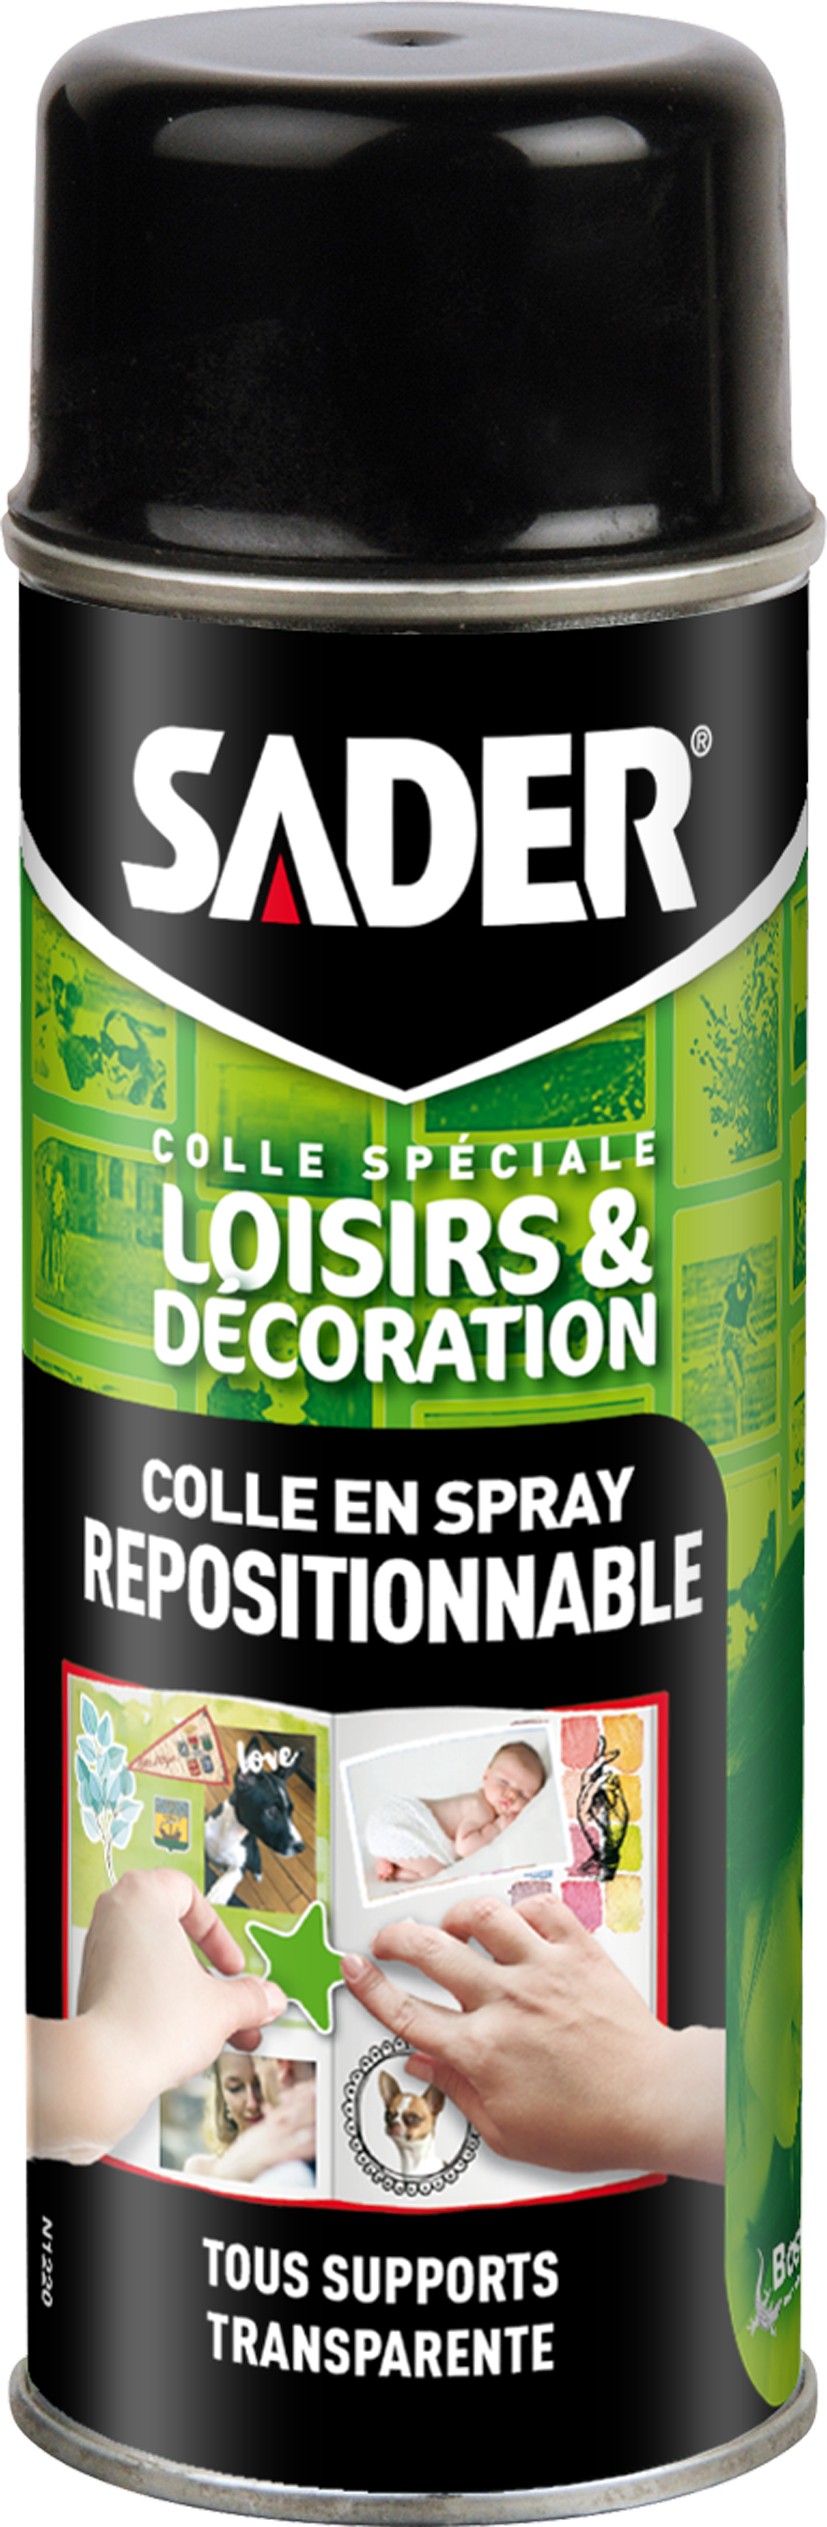 Colle loisirs et décoration repositionnable spray 200ml